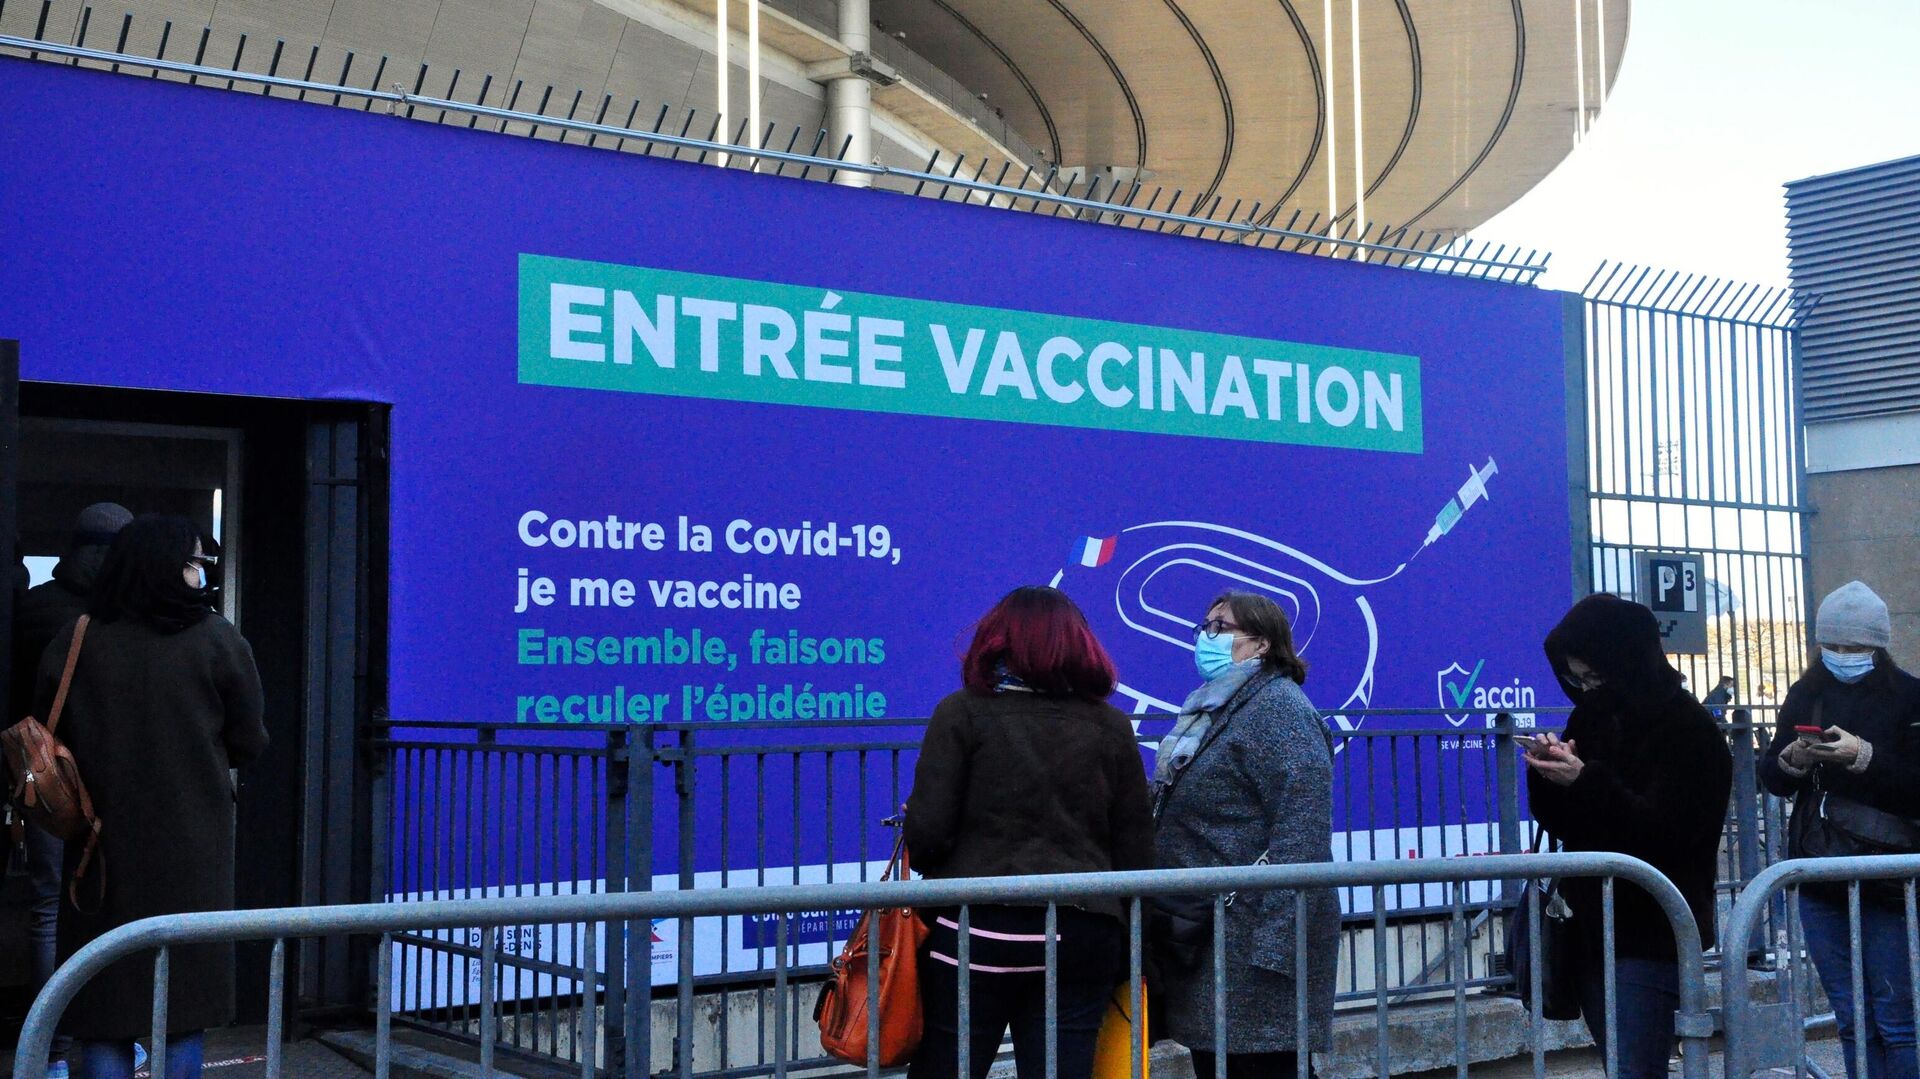 Местные жители стоят в очереди на вакцинацию от коронавируса в центре вакцинодроме на стадионе Стад де Франс - РИА Новости, 1920, 01.12.2021